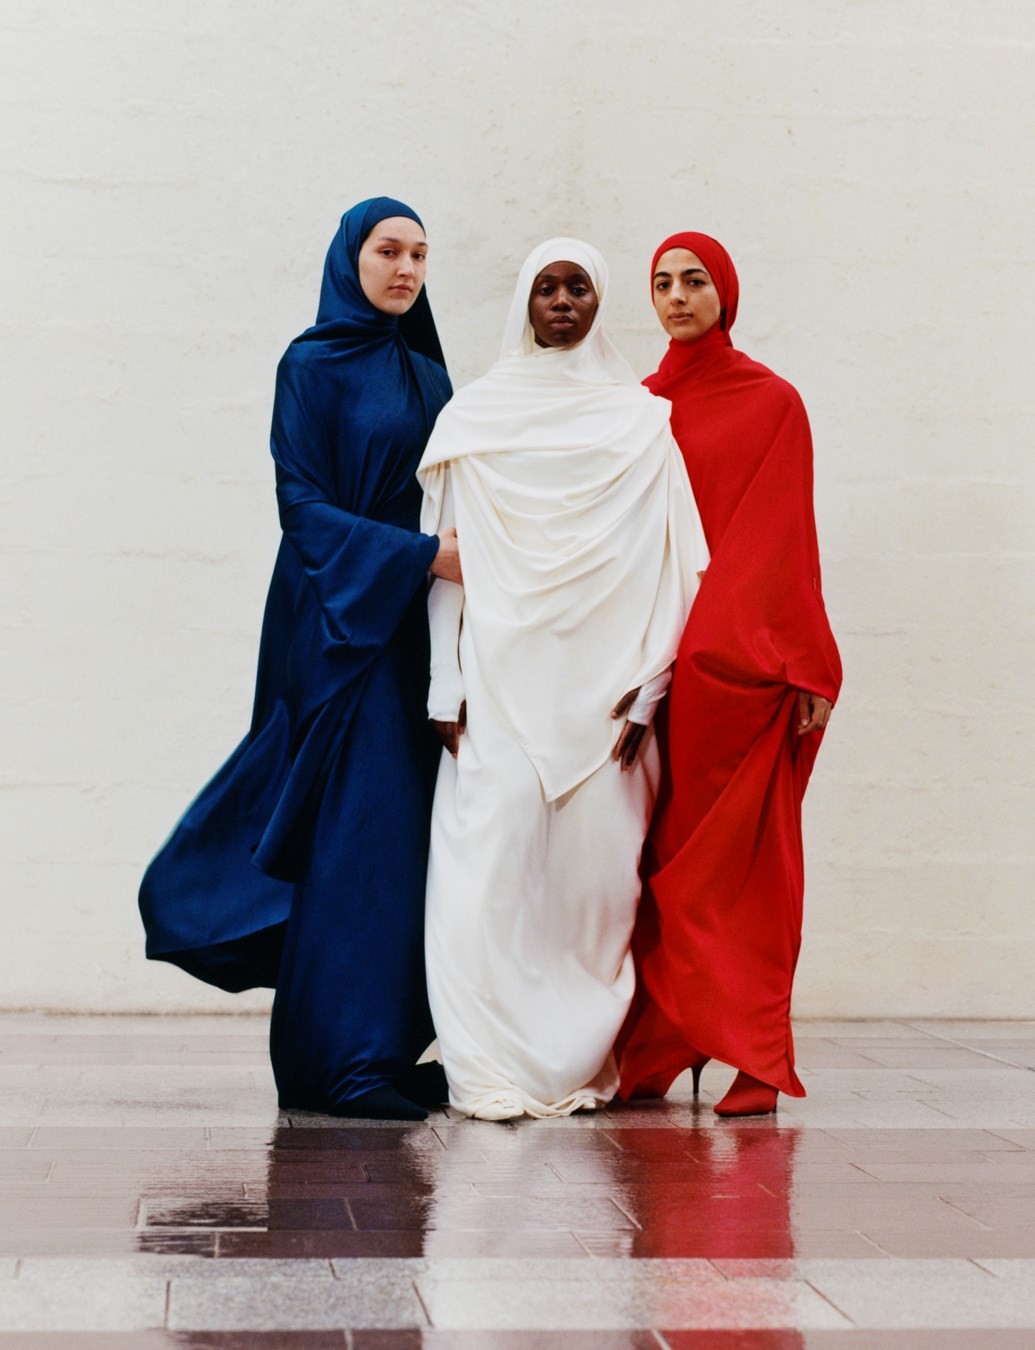 Dazed abaya France cover